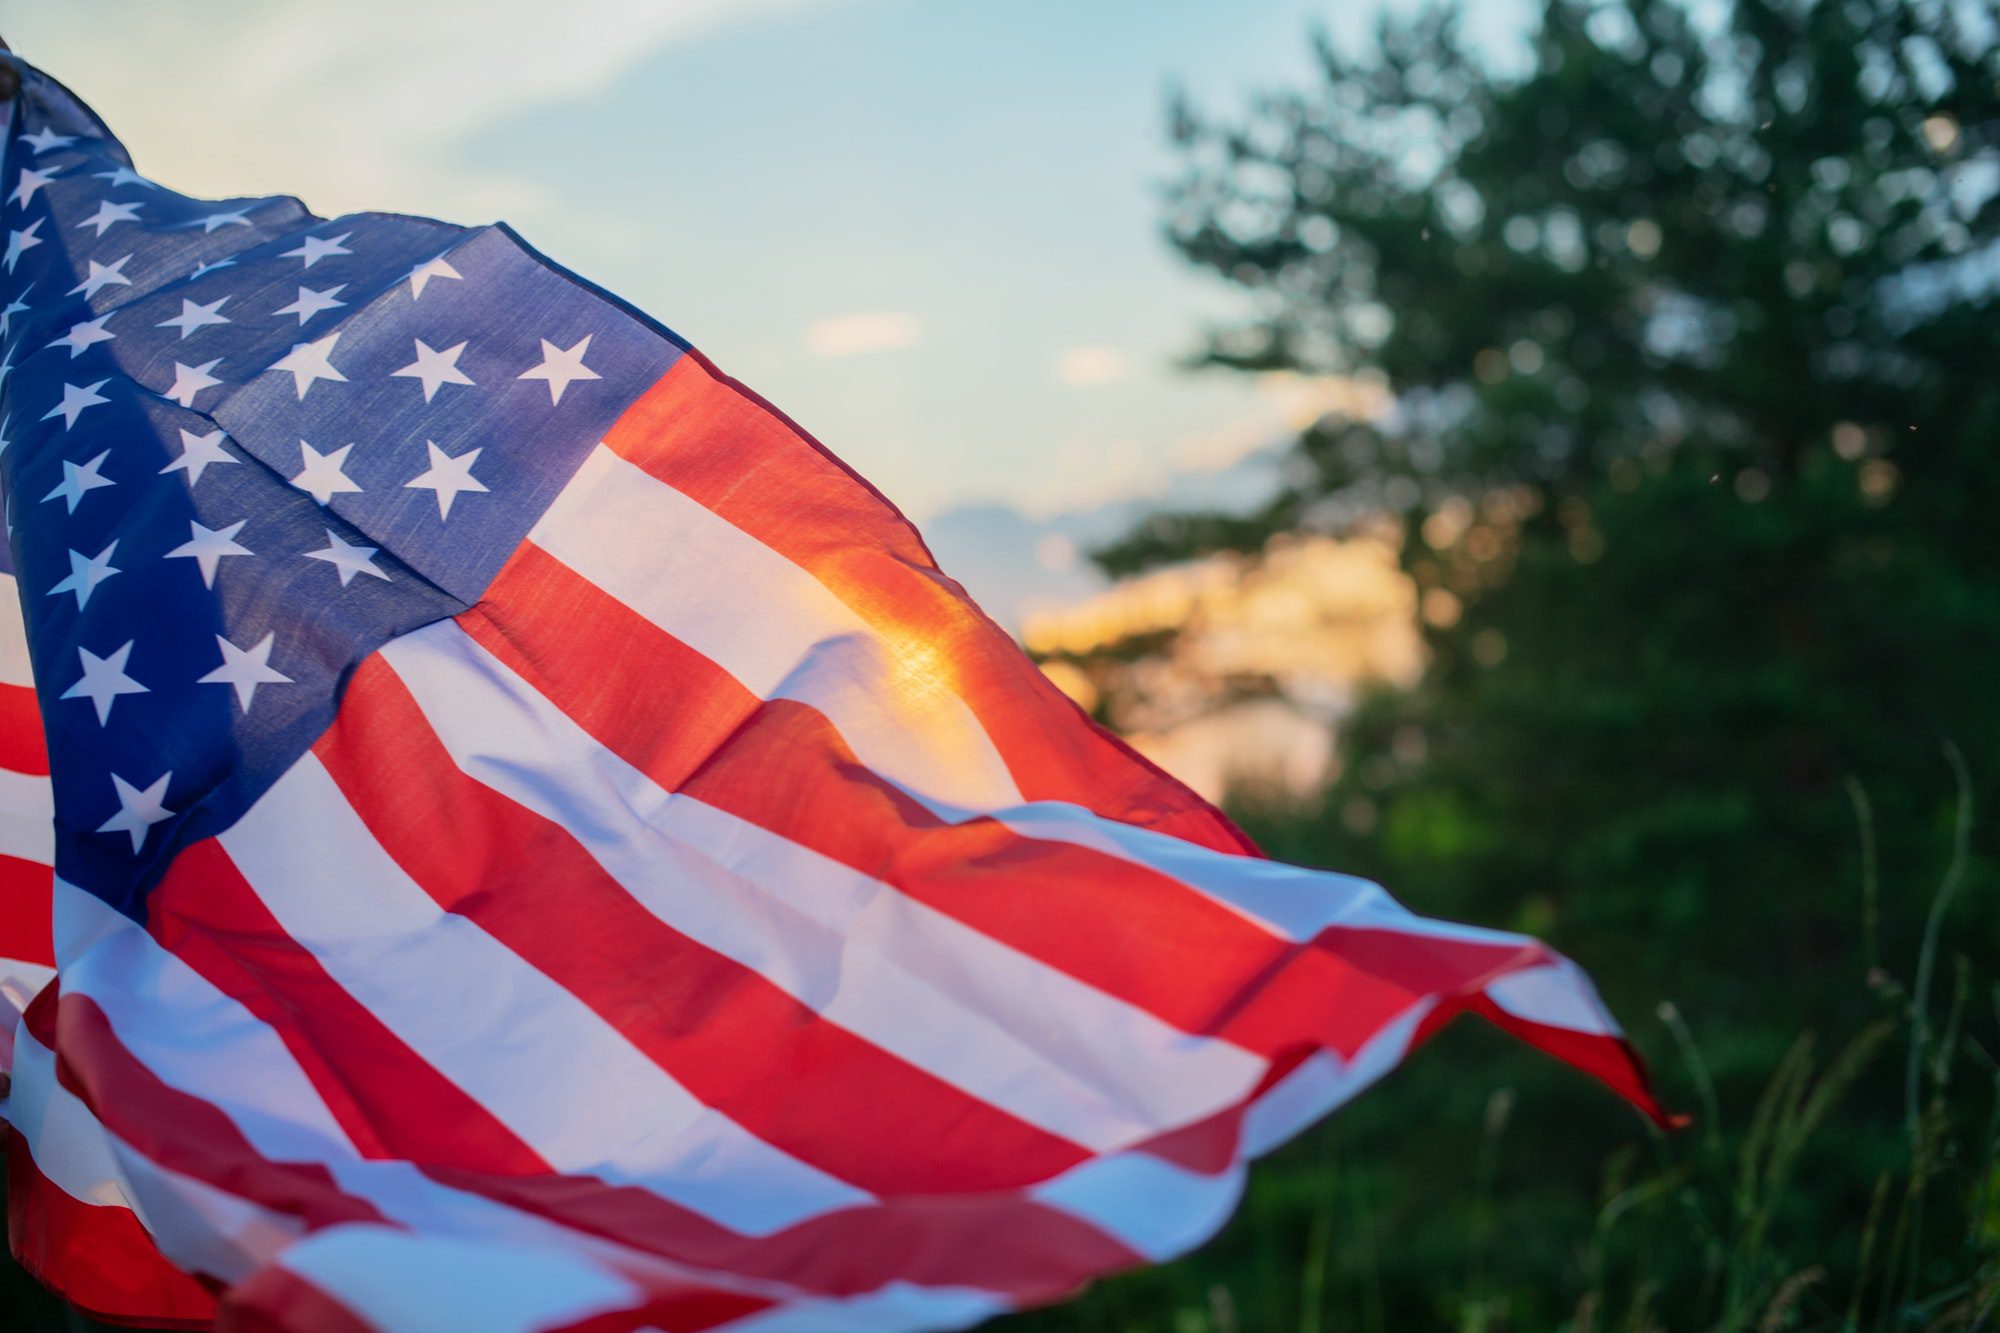 American flag waving in the wind representing the VA (Veterans of America).